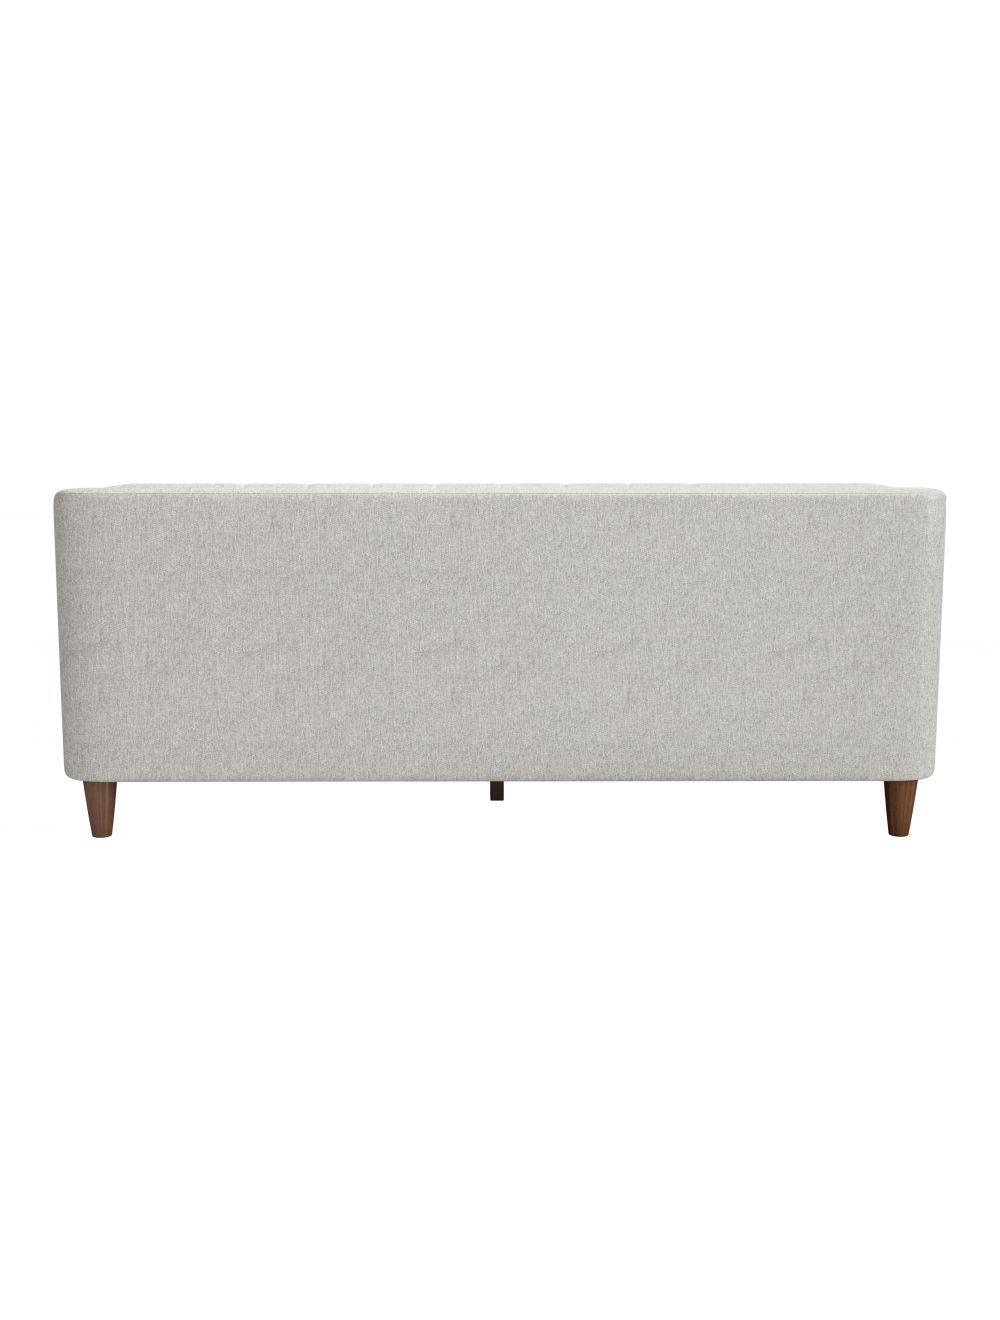 RJS-109583 Simple light luxury modern living room sofa 